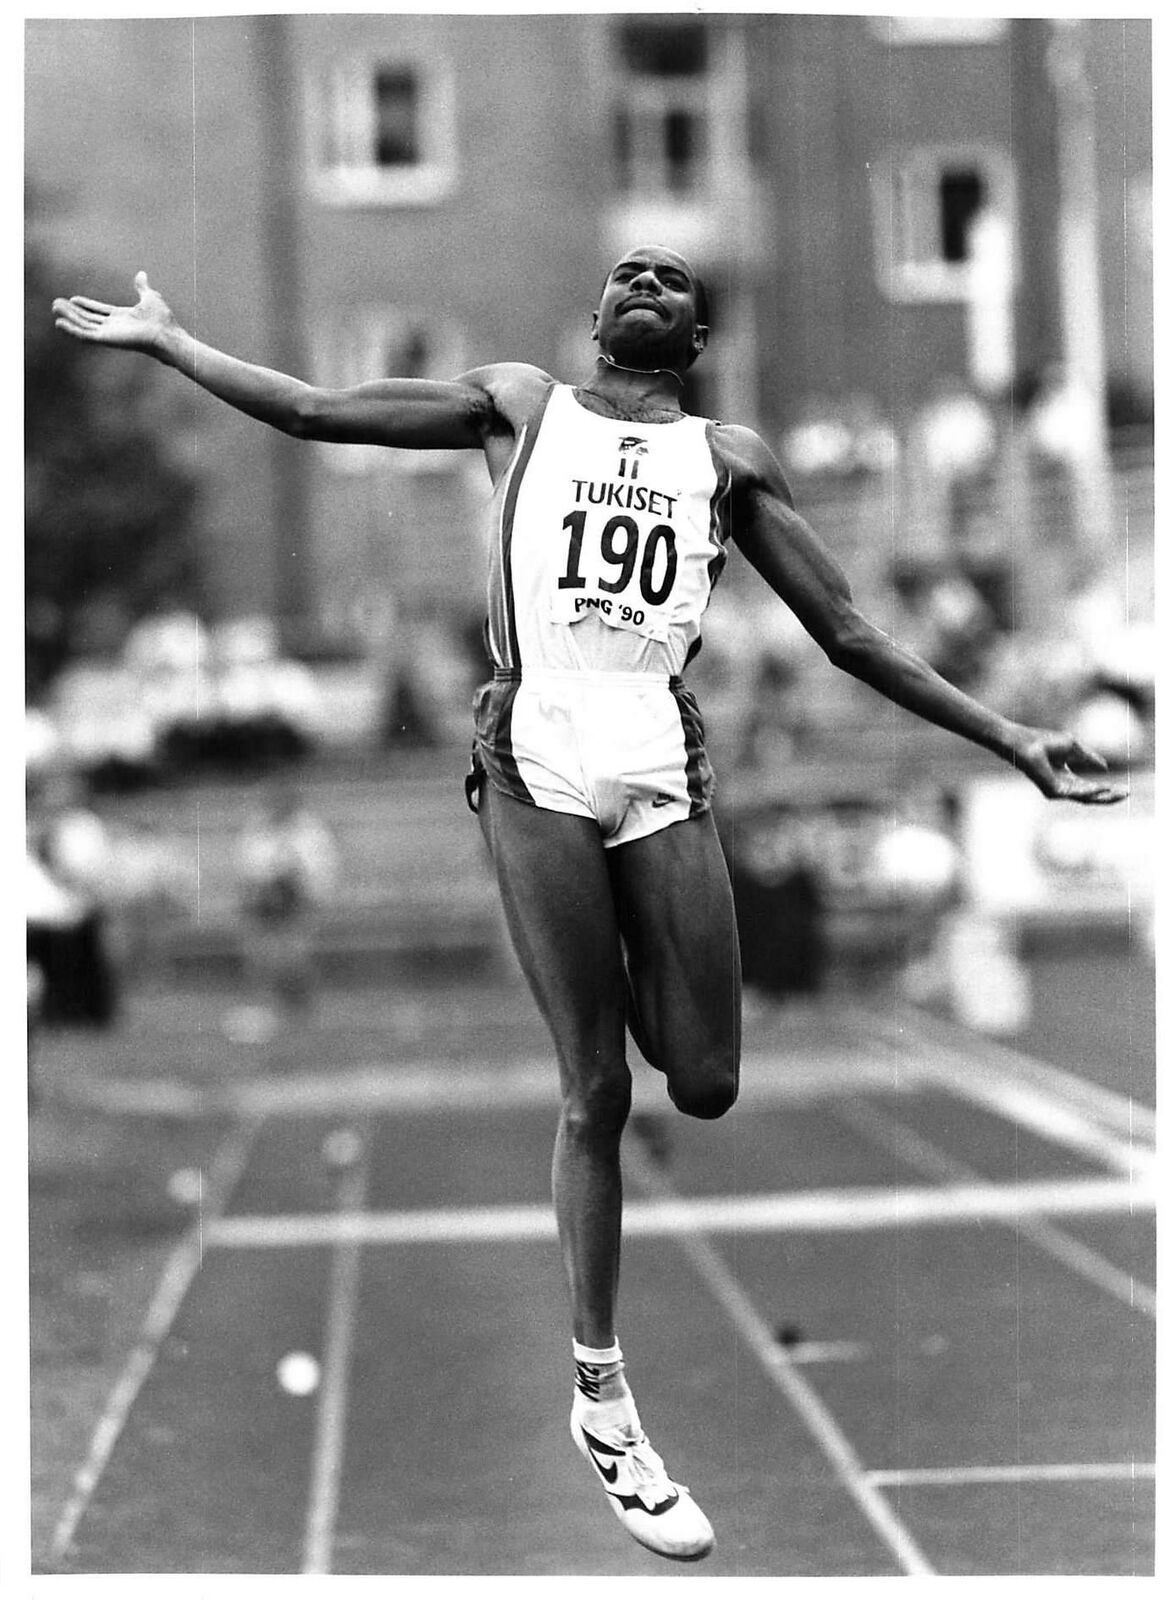 1990 Press Photo MIKE POWELL Black American Long Jumper USA #190 Track & Field 